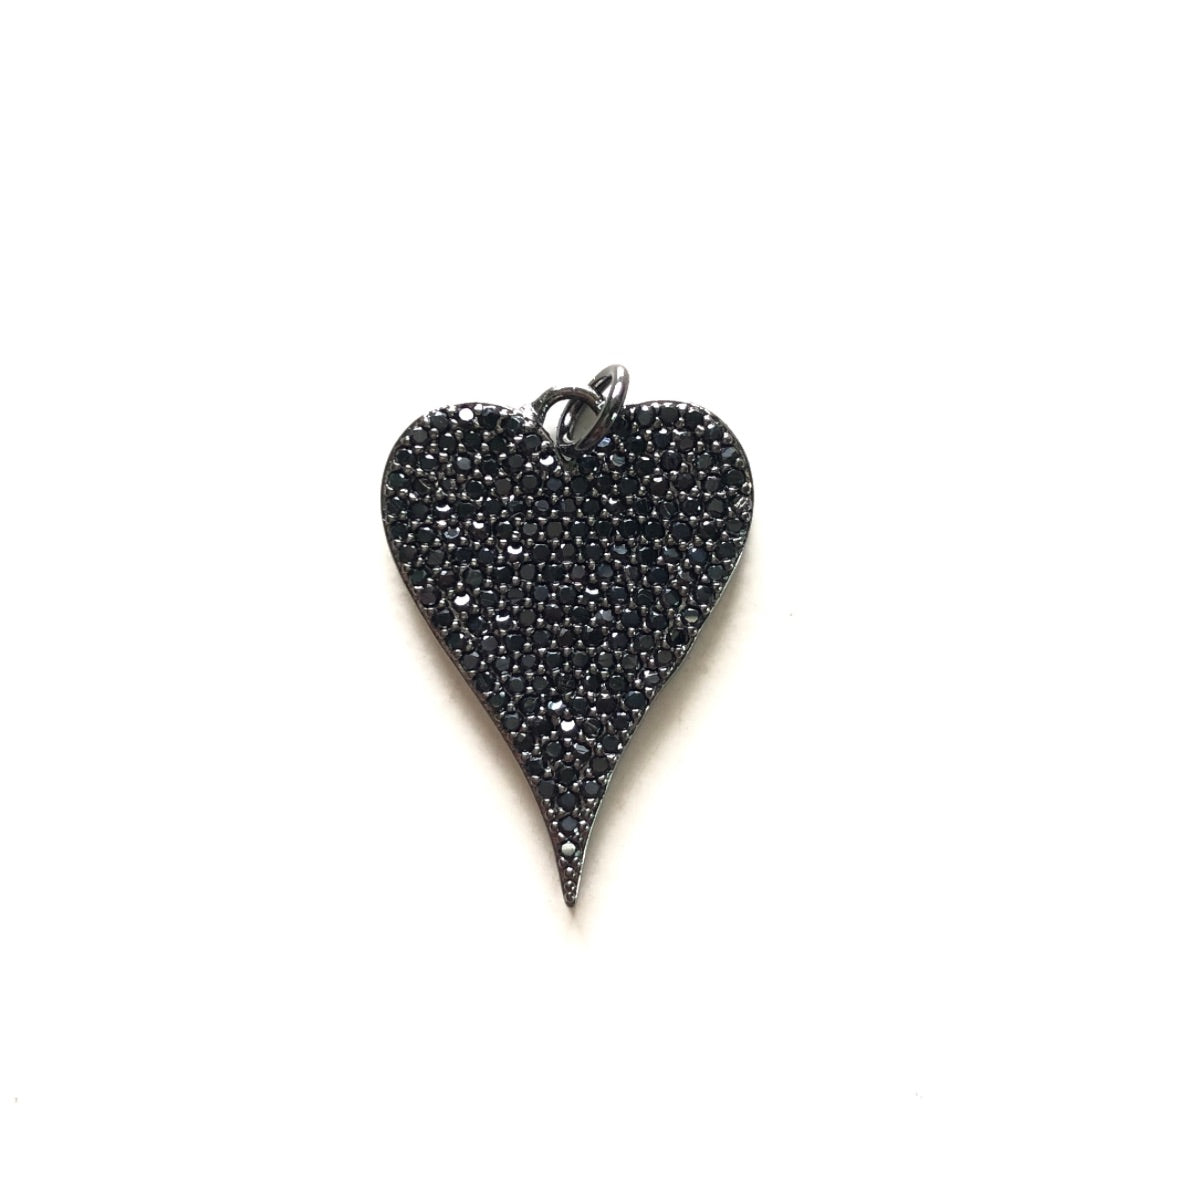 10pcs/lot 25*18mm CZ Paved Heart Charm Pendants Black on Black CZ Paved Charms Hearts Charms Beads Beyond